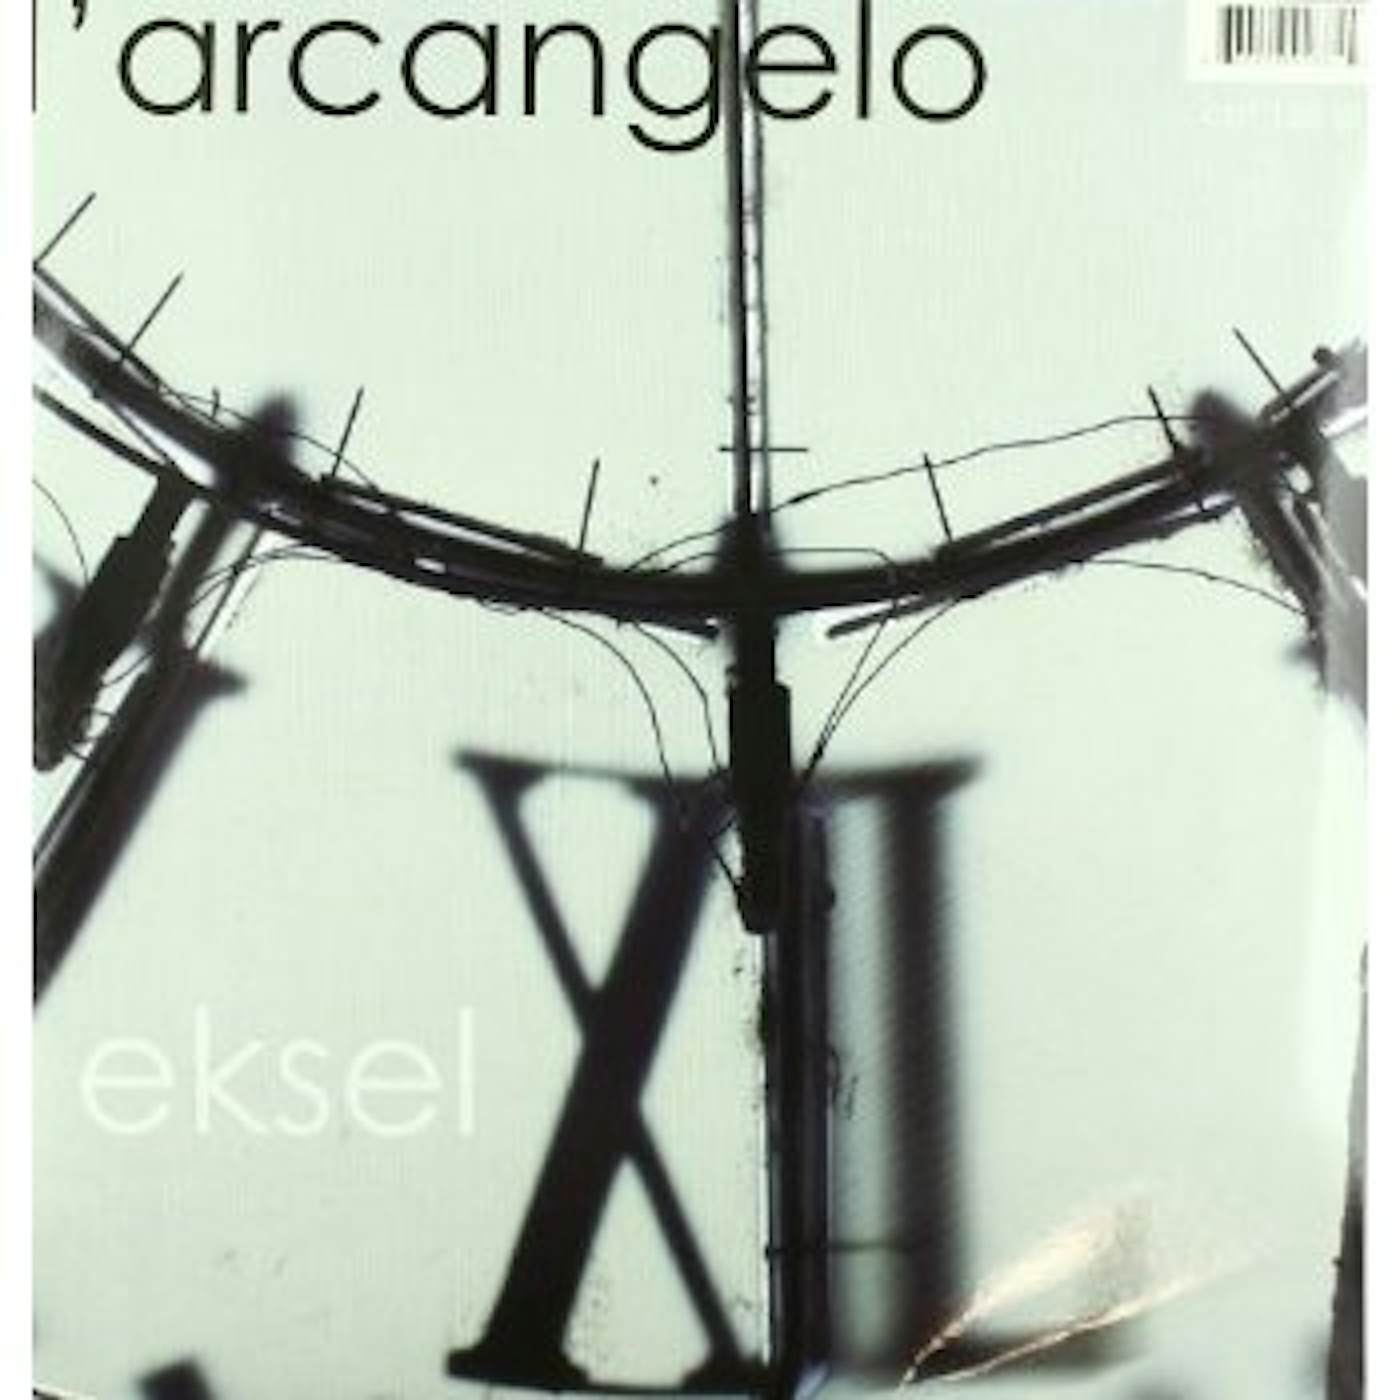 D'Arcangelo Eksel Vinyl Record